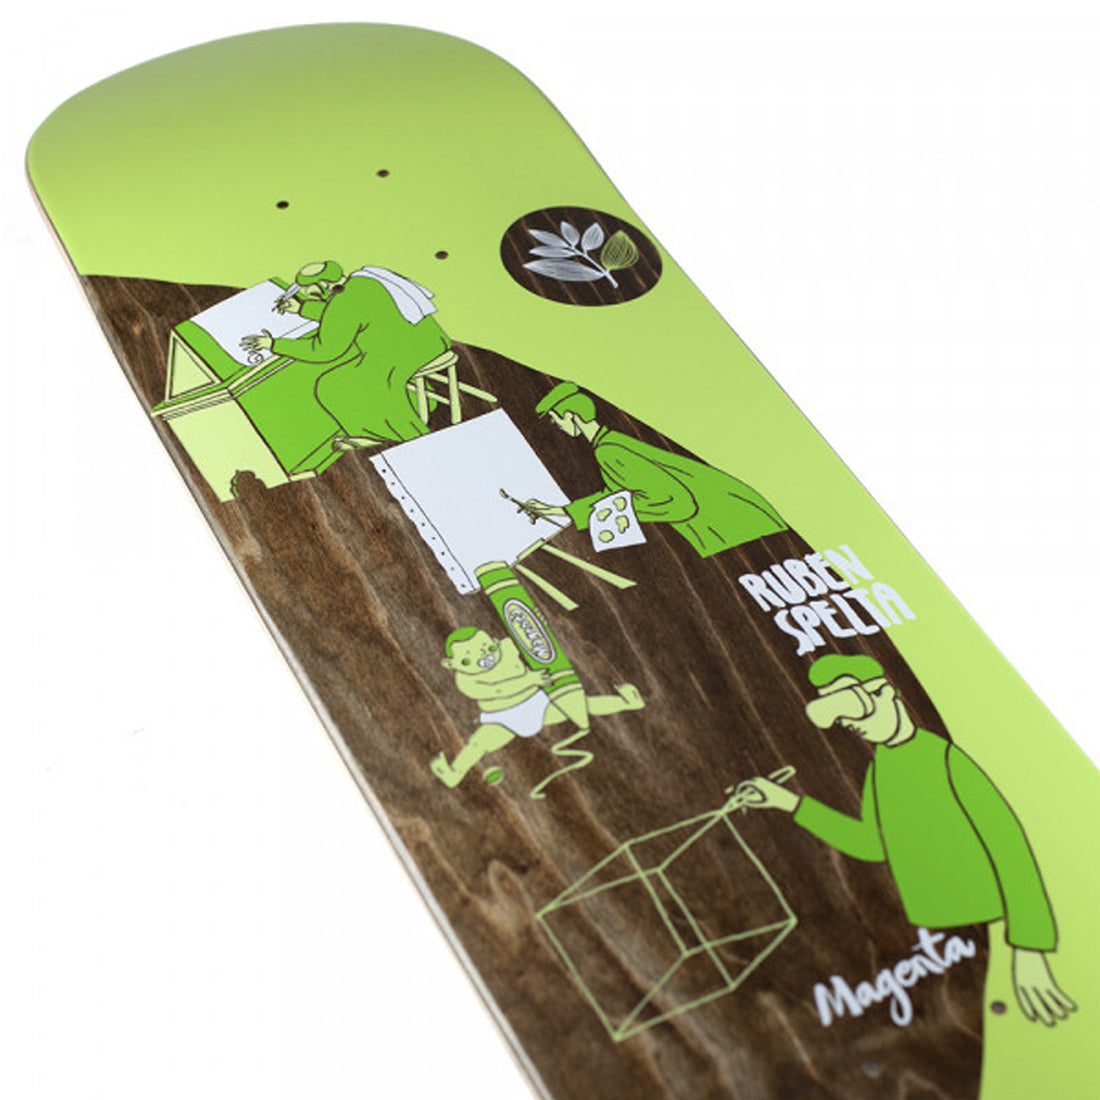 Magenta New Pro 2 8.125" Skateboard Deck